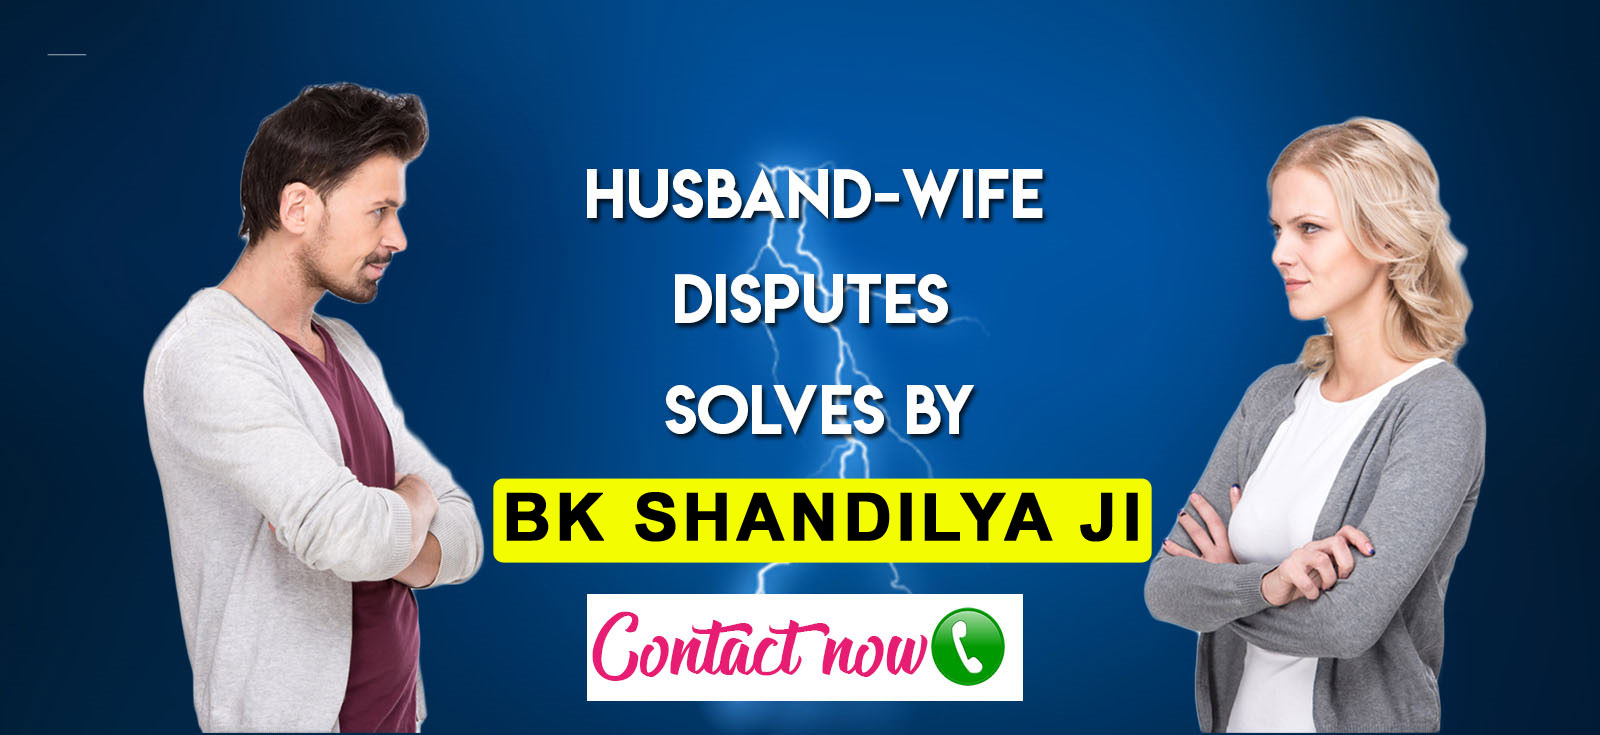 husband wife disputes